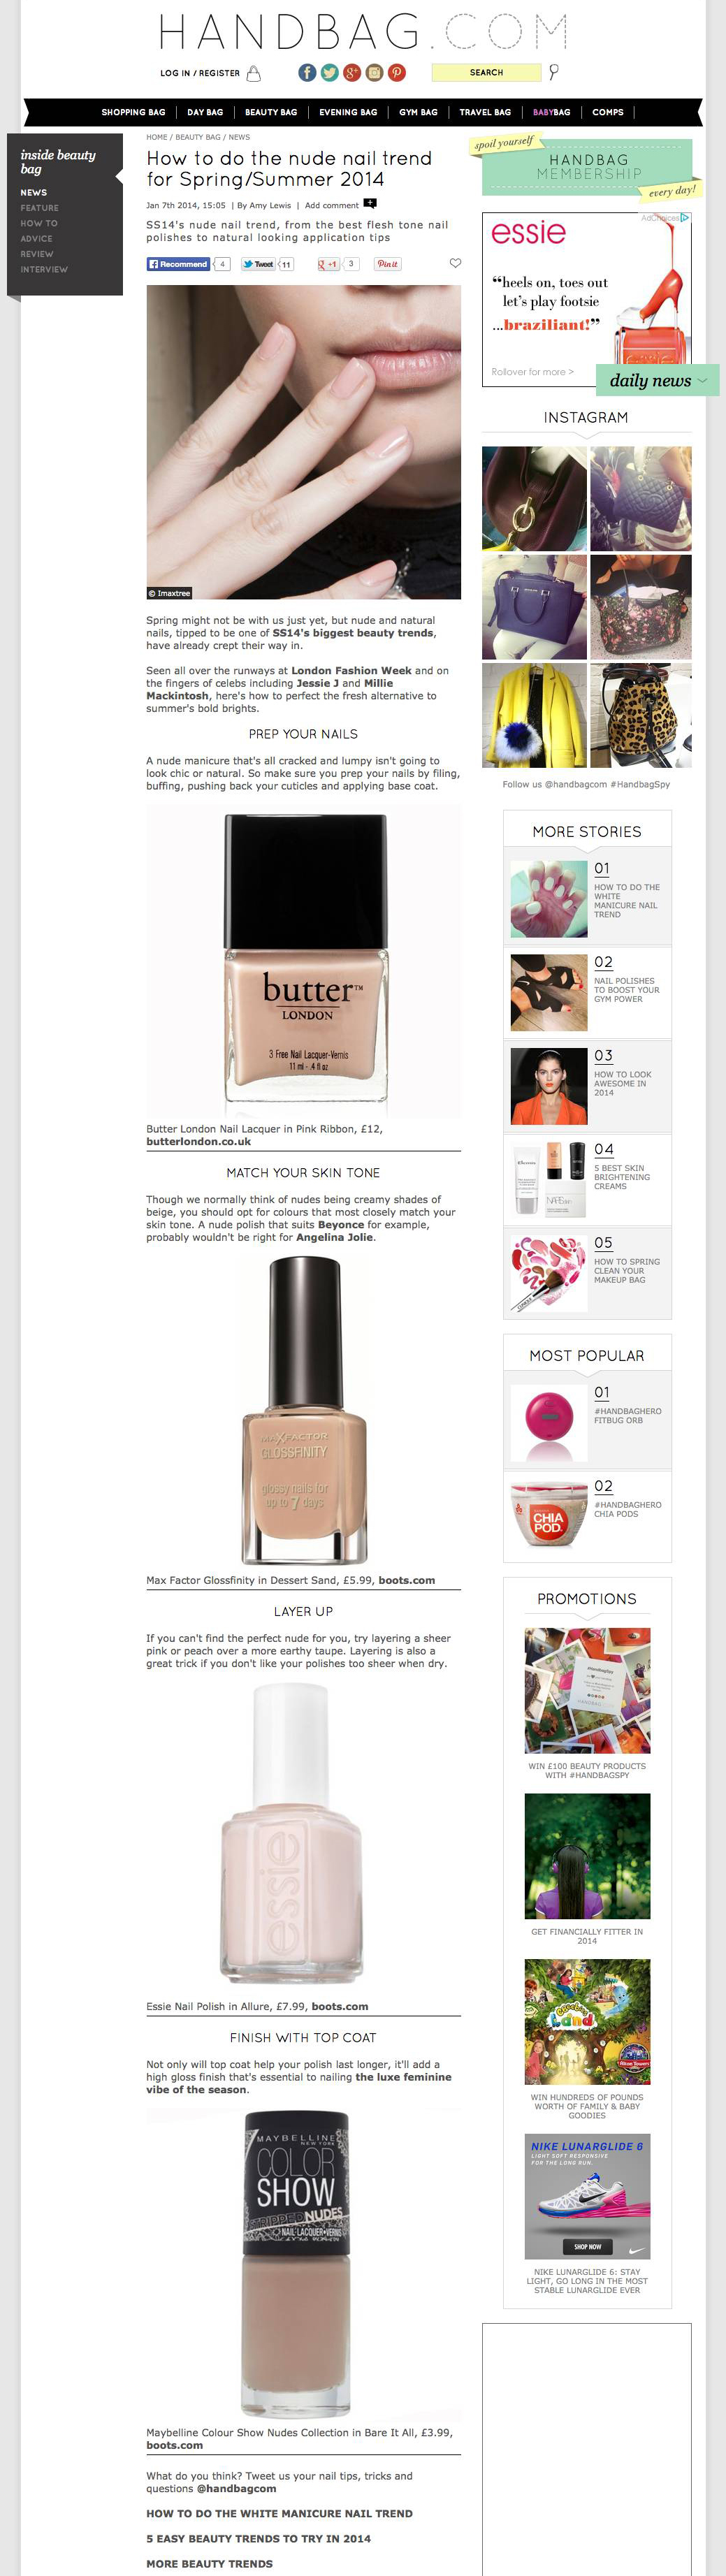 How_to_do_the_nude_nail_trend_for_Spring_Summer_2014_-_Beauty_Bag_News_-_handbag.com_-_2014-07-31_11.30.17.png